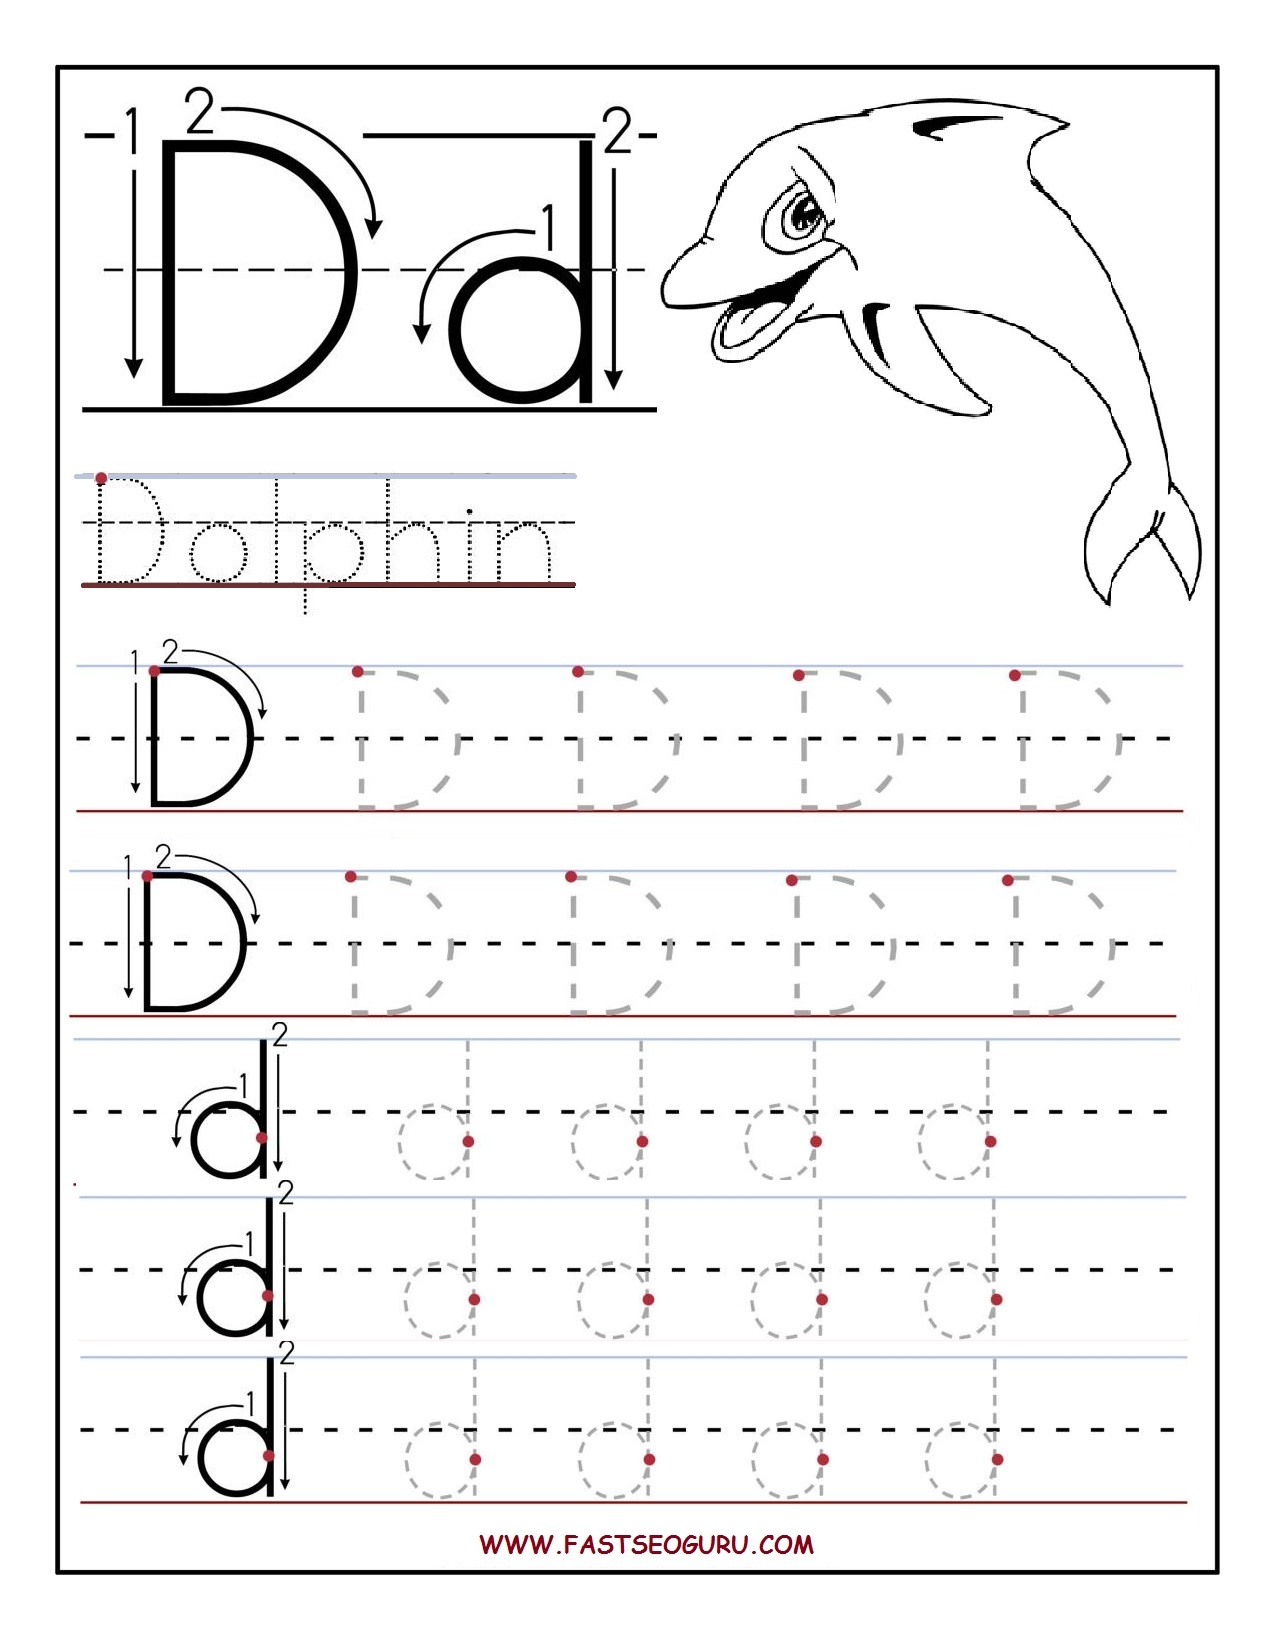 Printable letter D tracing worksheets for preschool Within Letter D Worksheet For Preschool